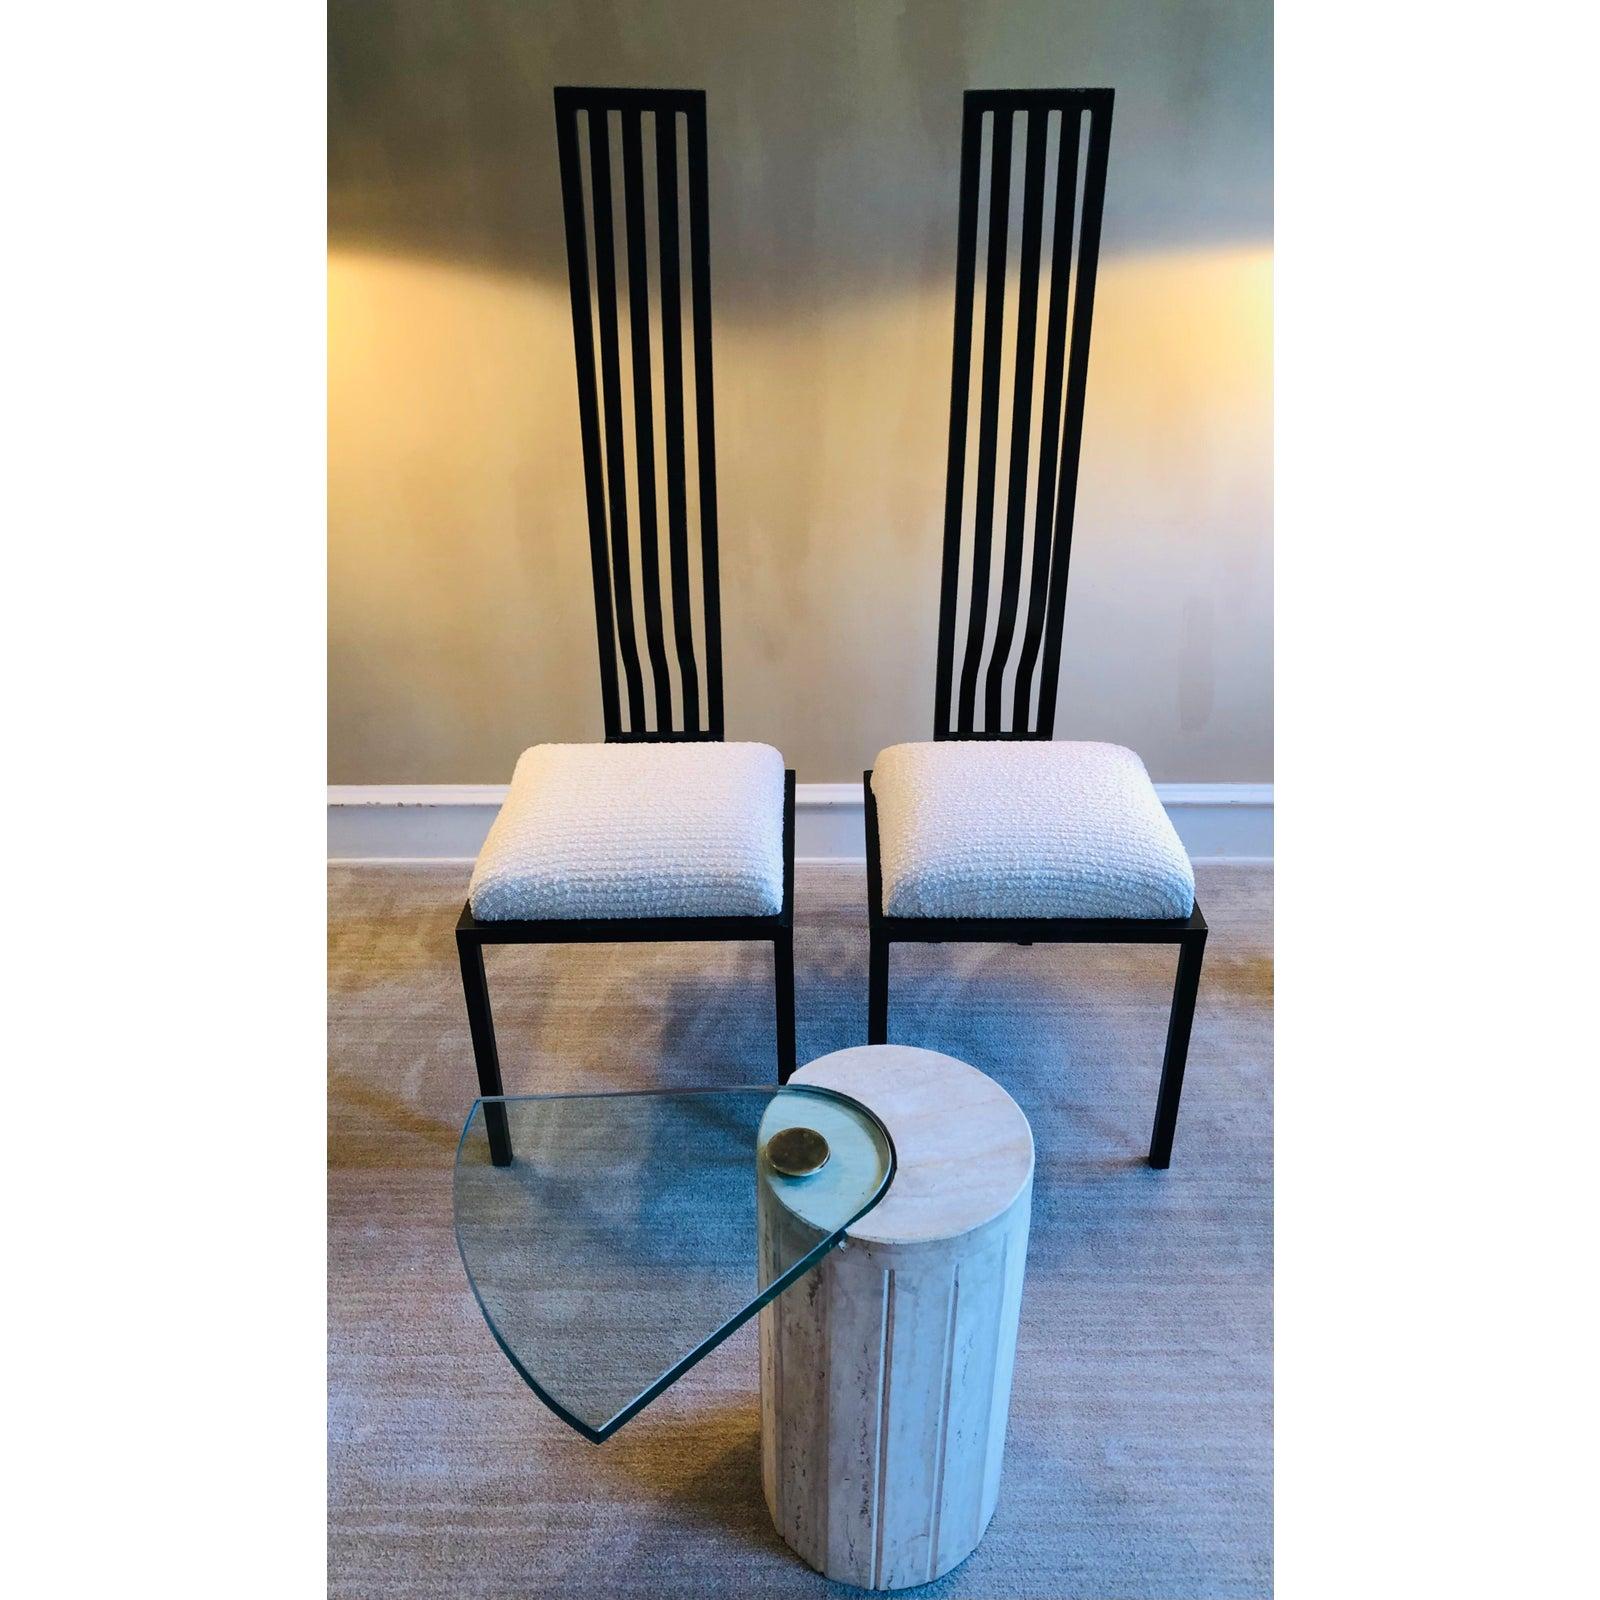 Late 20th Century Postmodern Studio-Made Italian Chairs in Iron, a Pair